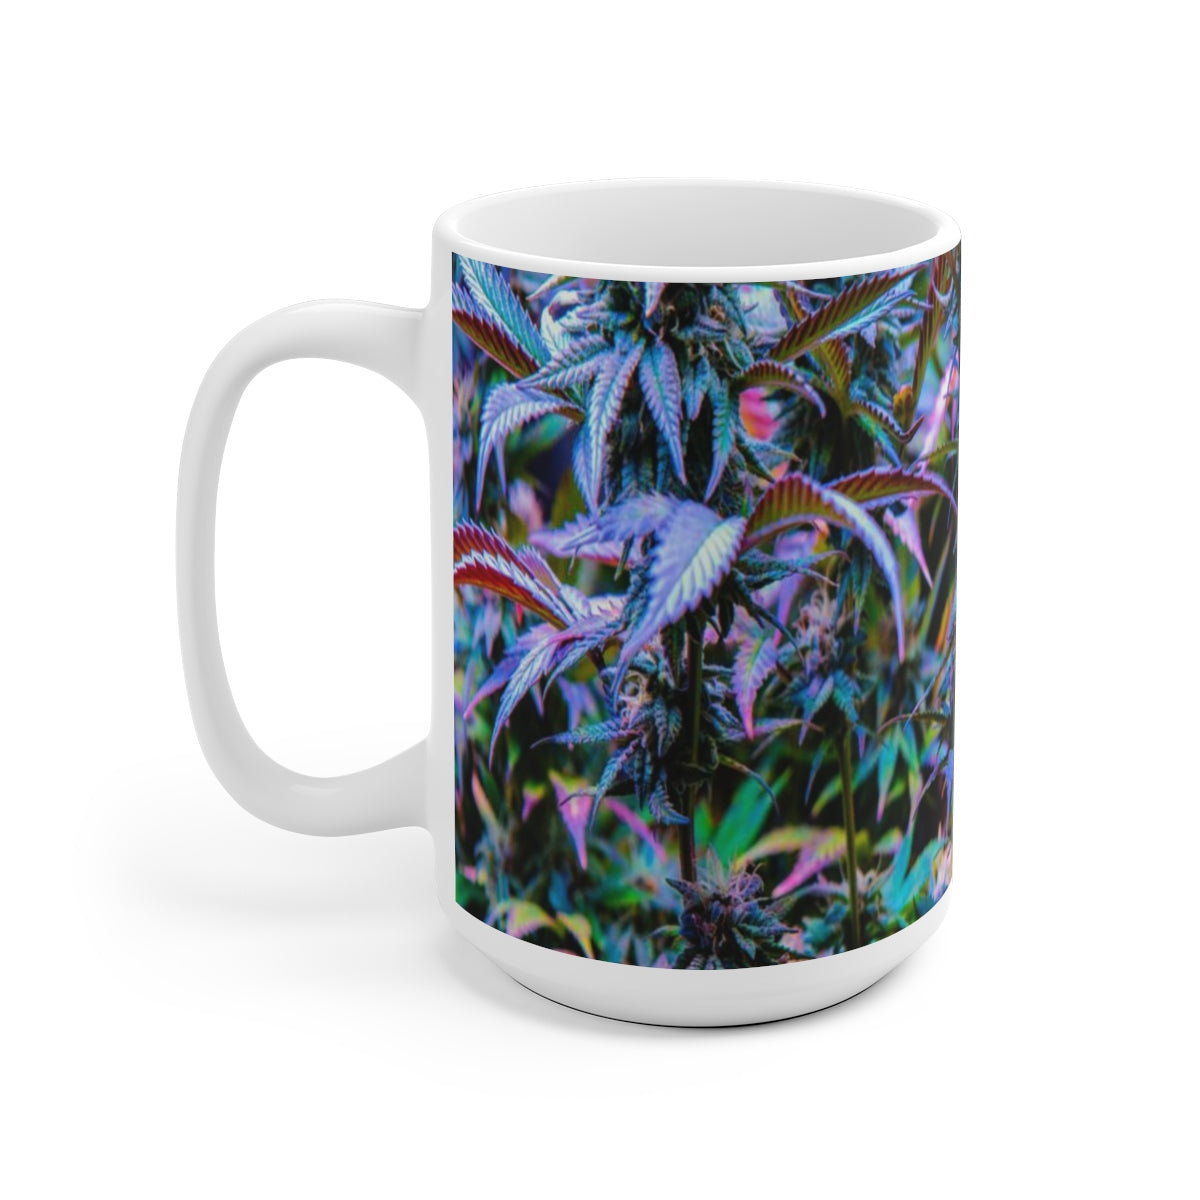 The Rainbow Cannabis White Ceramic Mug